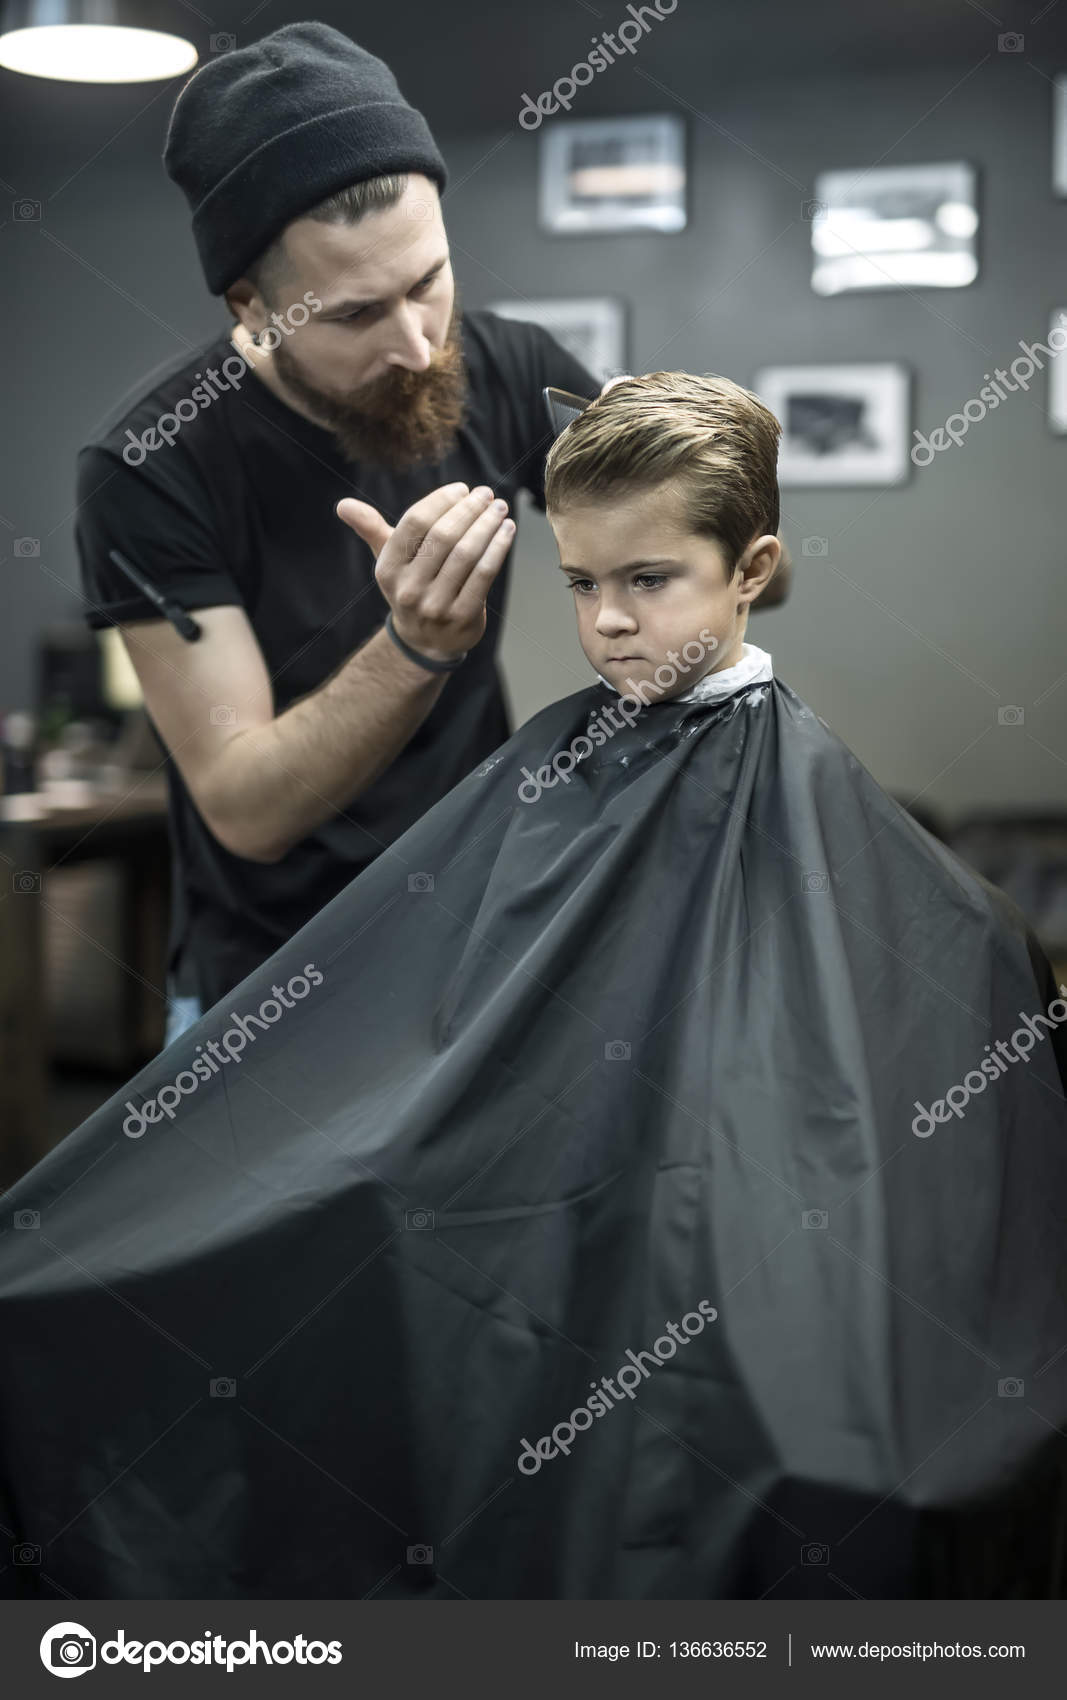 Kids Hair Styling In Barbershop Stock Photo C Bezikus